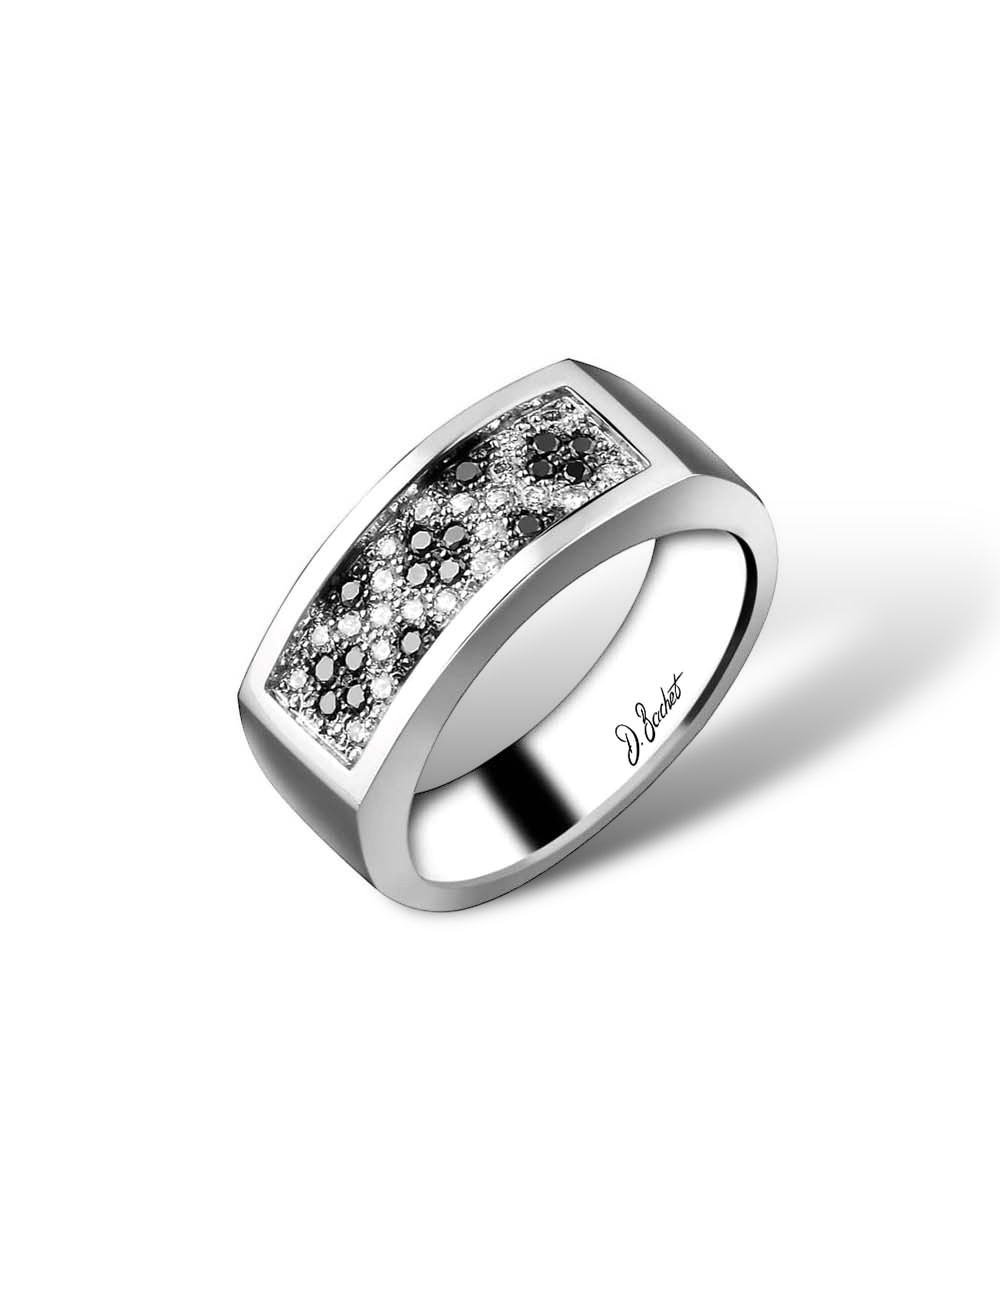 Art Deco 'Epicurien' signet ring with 38 diamonds, a men's jewel blending joy of living with modern elegance.